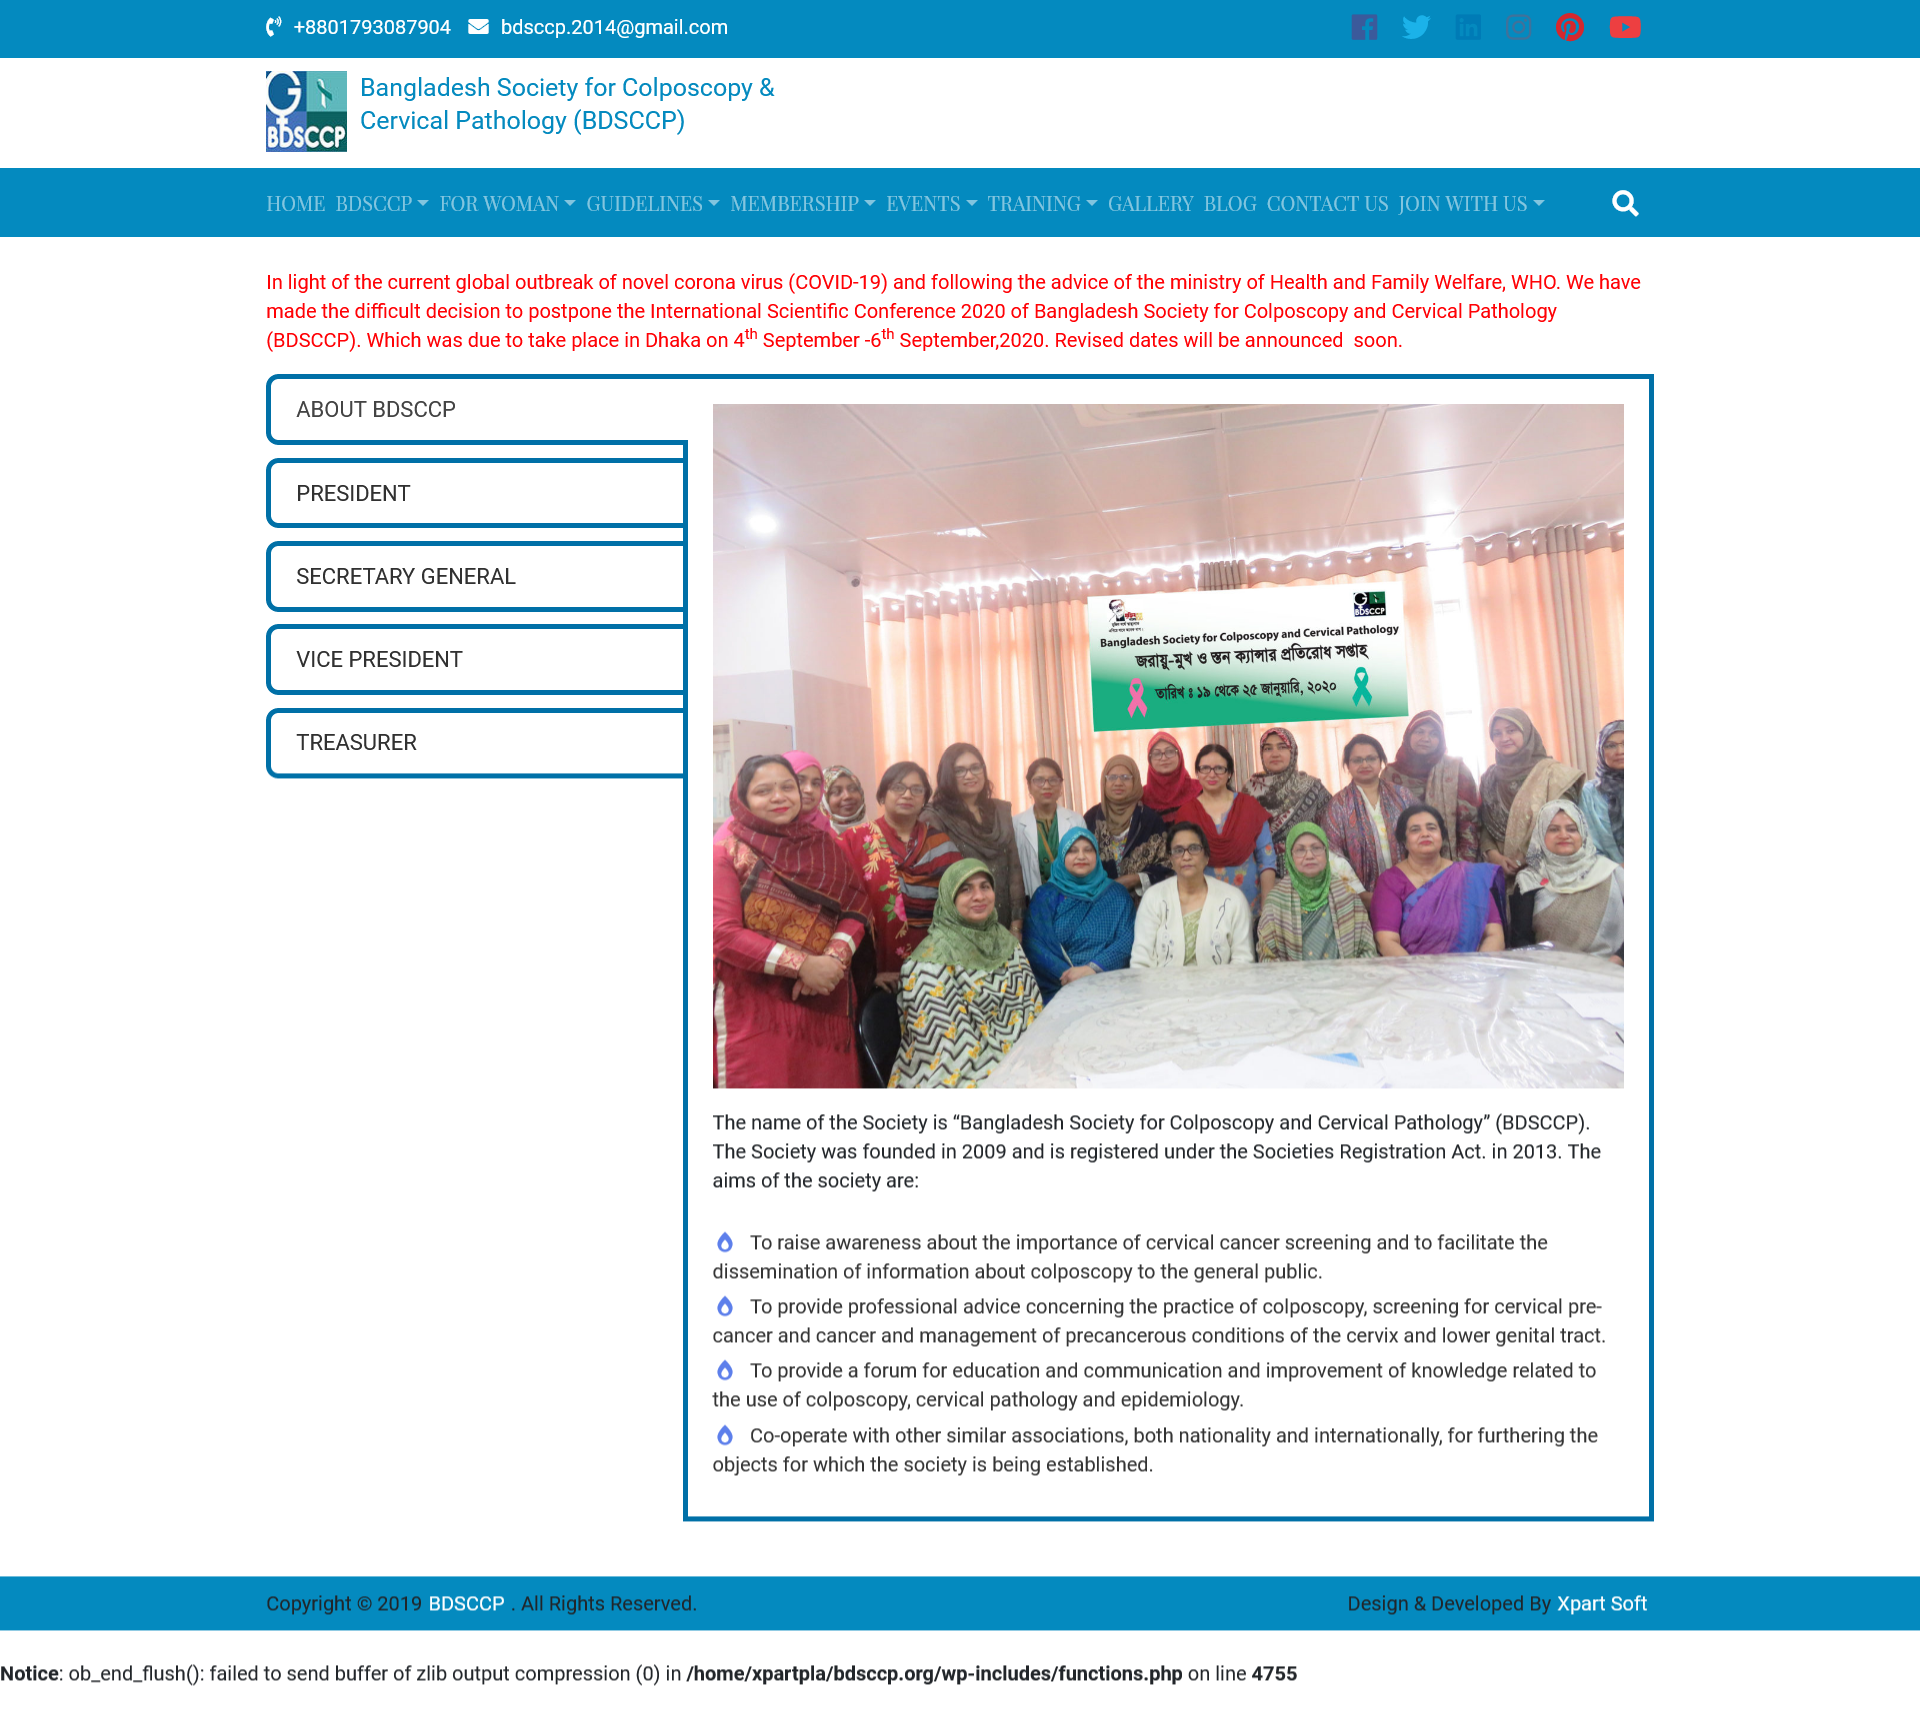 Bangladesh Society for Colposcopy & Cervical Pathology (BDSCCP)